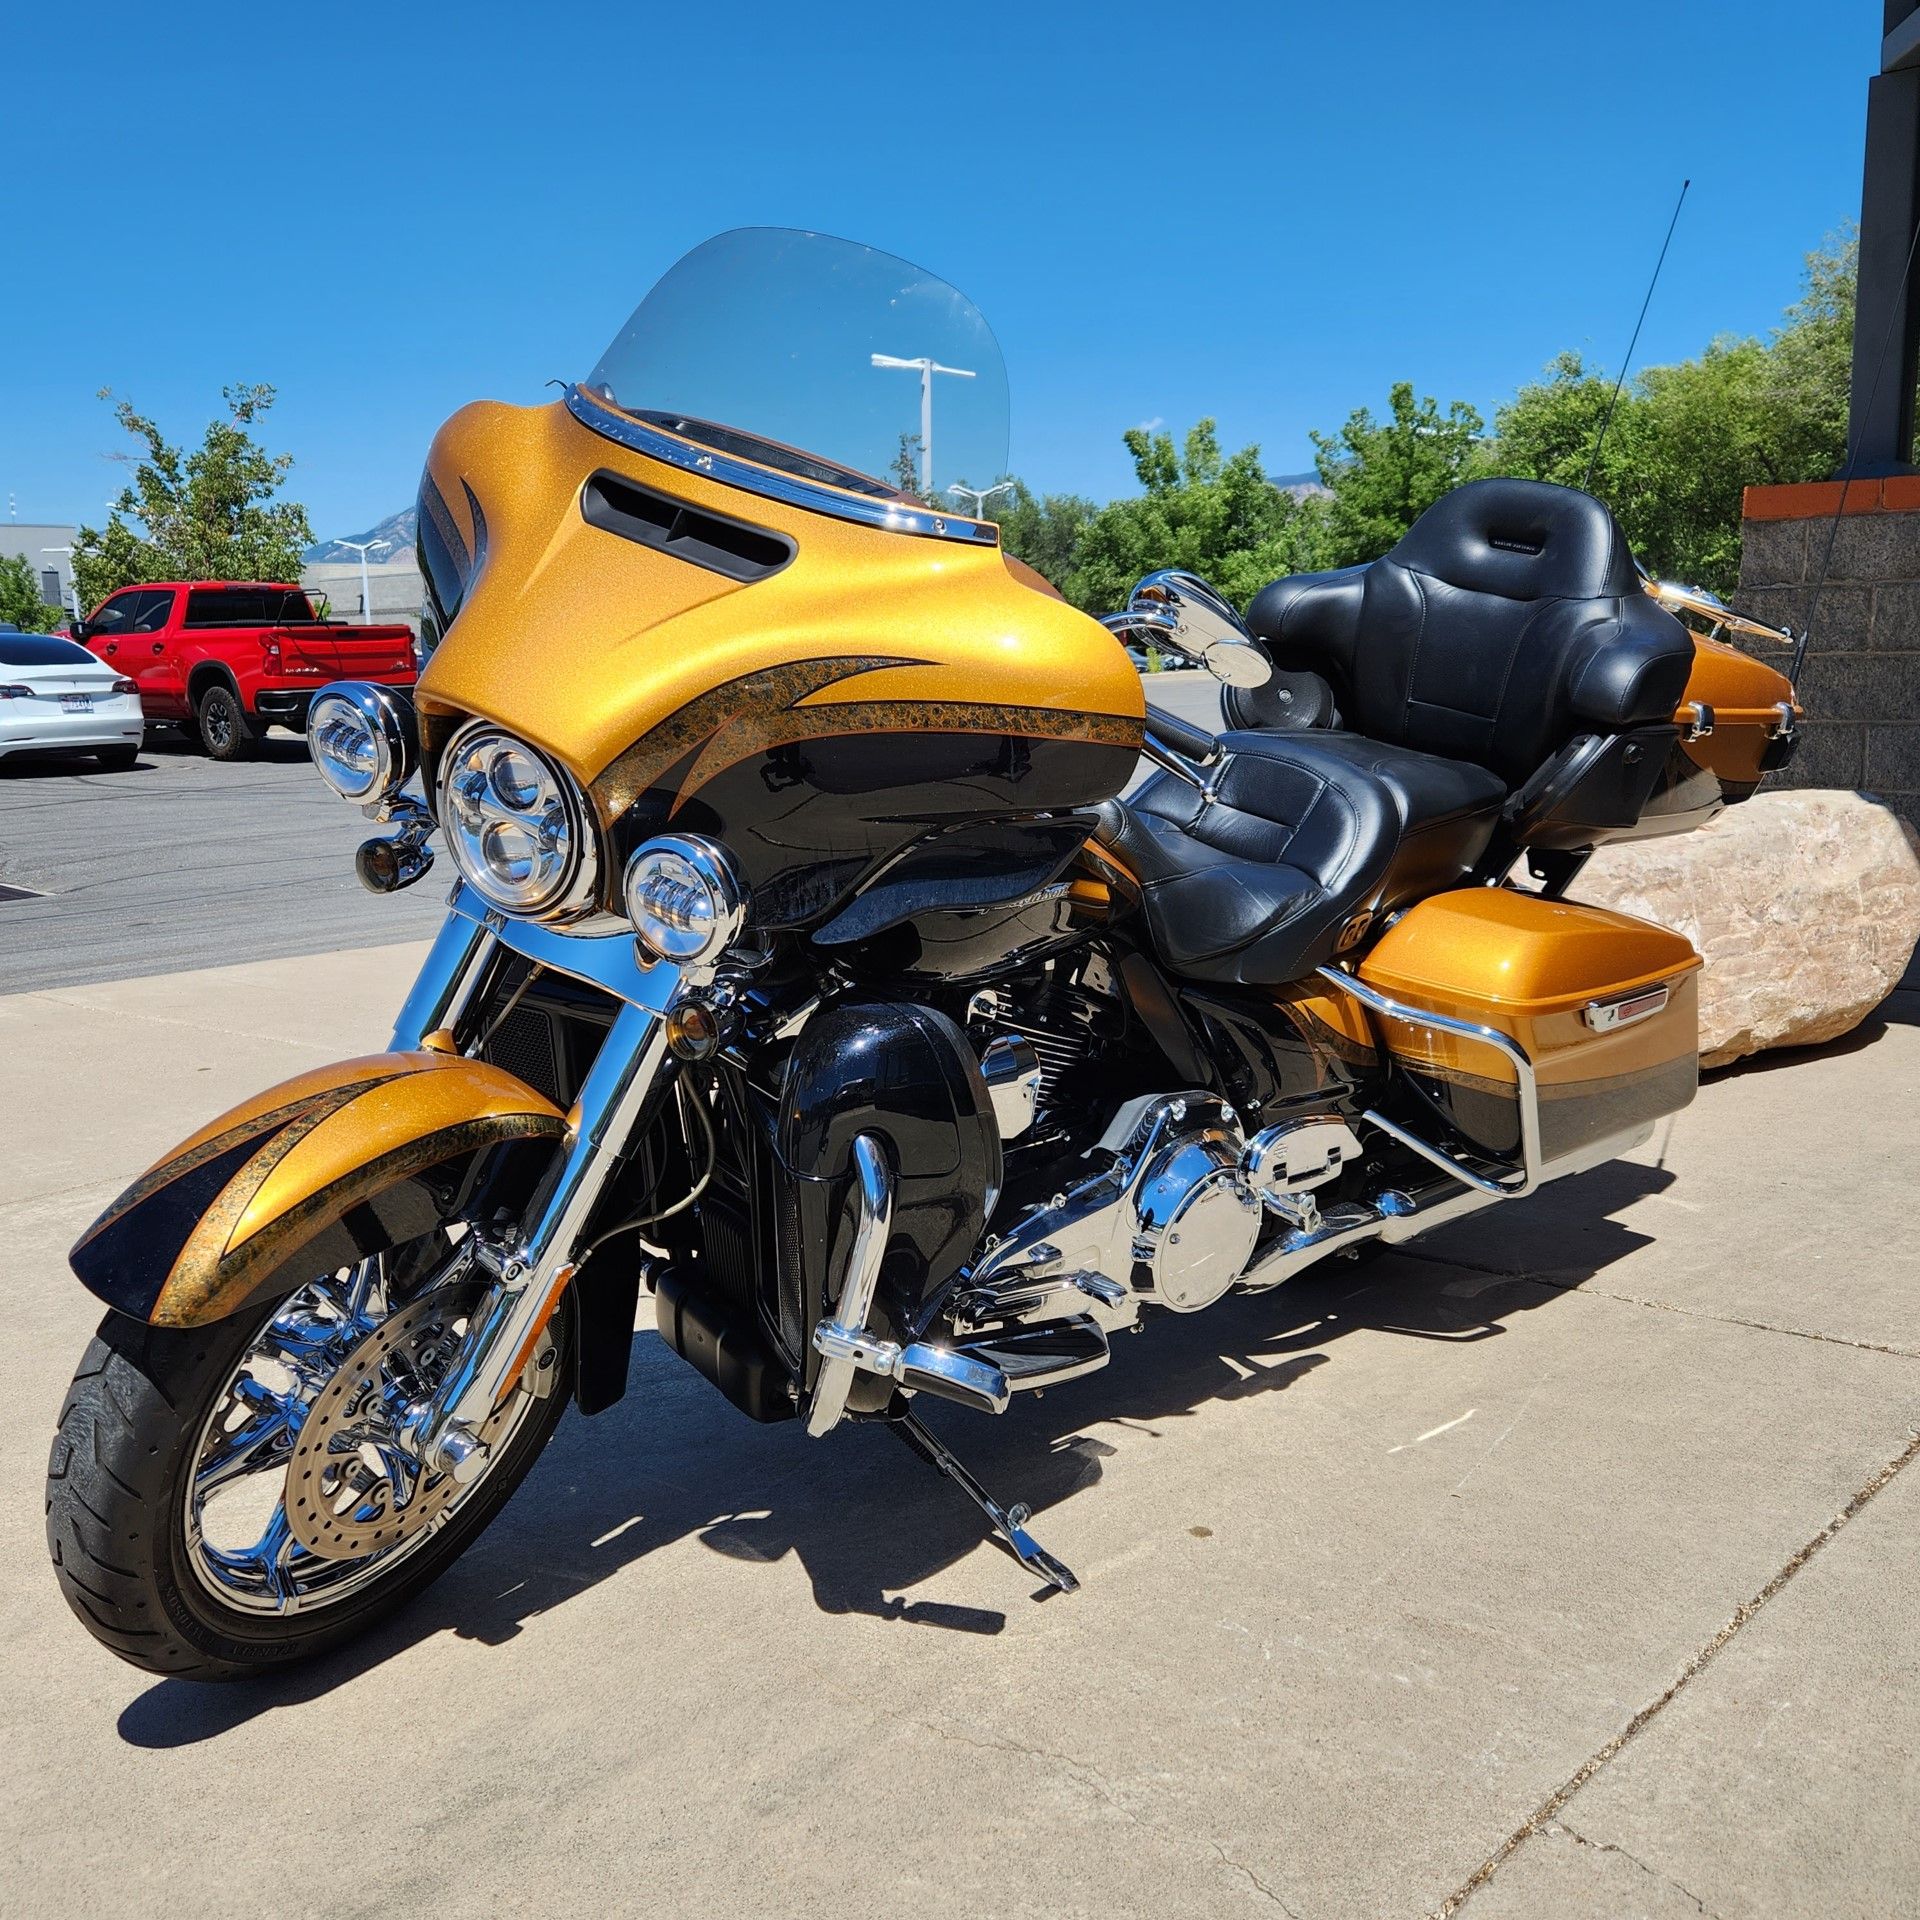 2015 Harley-Davidson CVO™ Limited in Riverdale, Utah - Photo 4